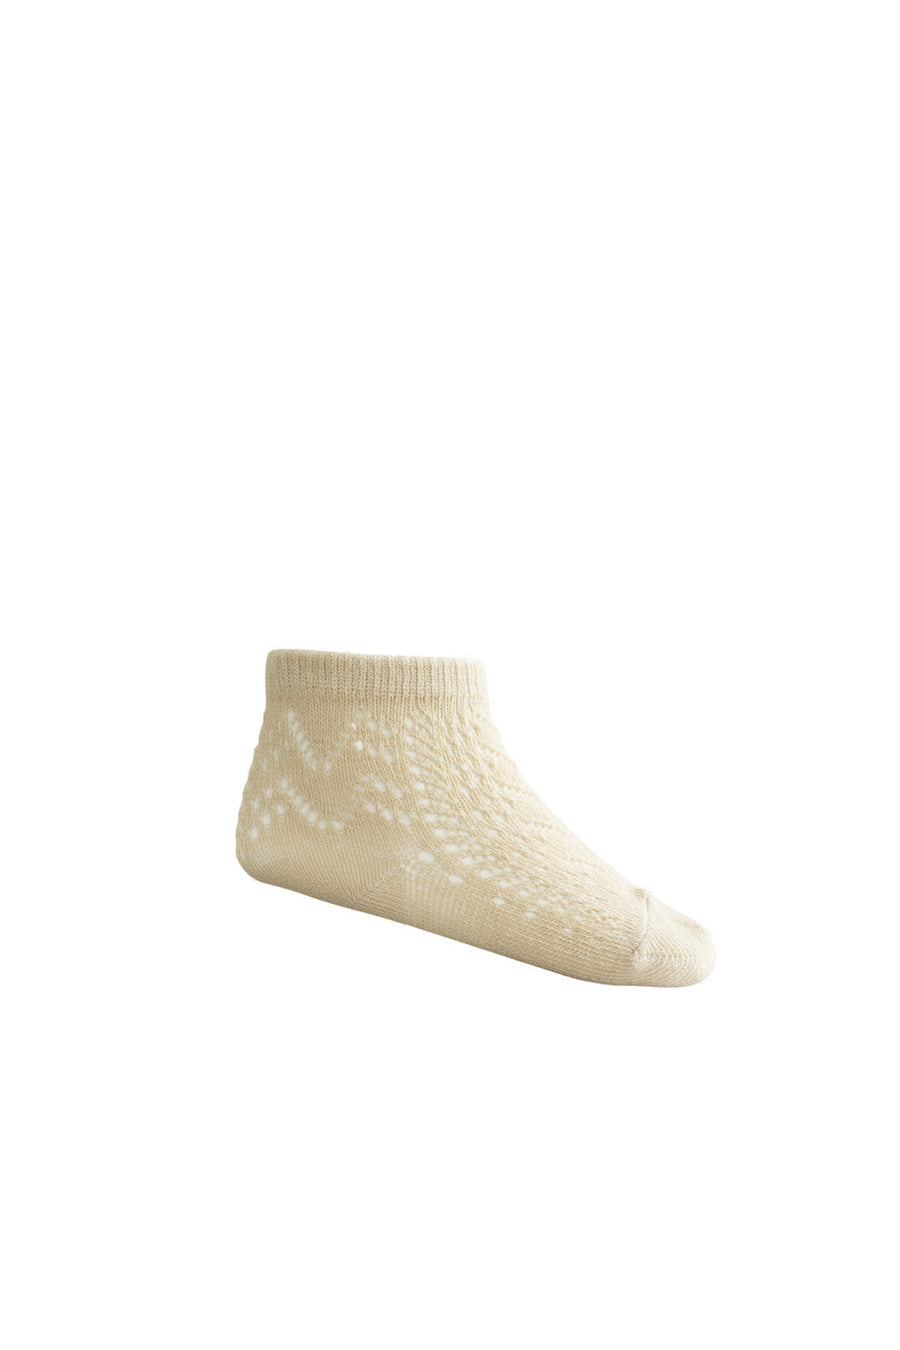 Cable Weave Ankle Sock - Sandstone - Beige baby socks from Jamie Kay